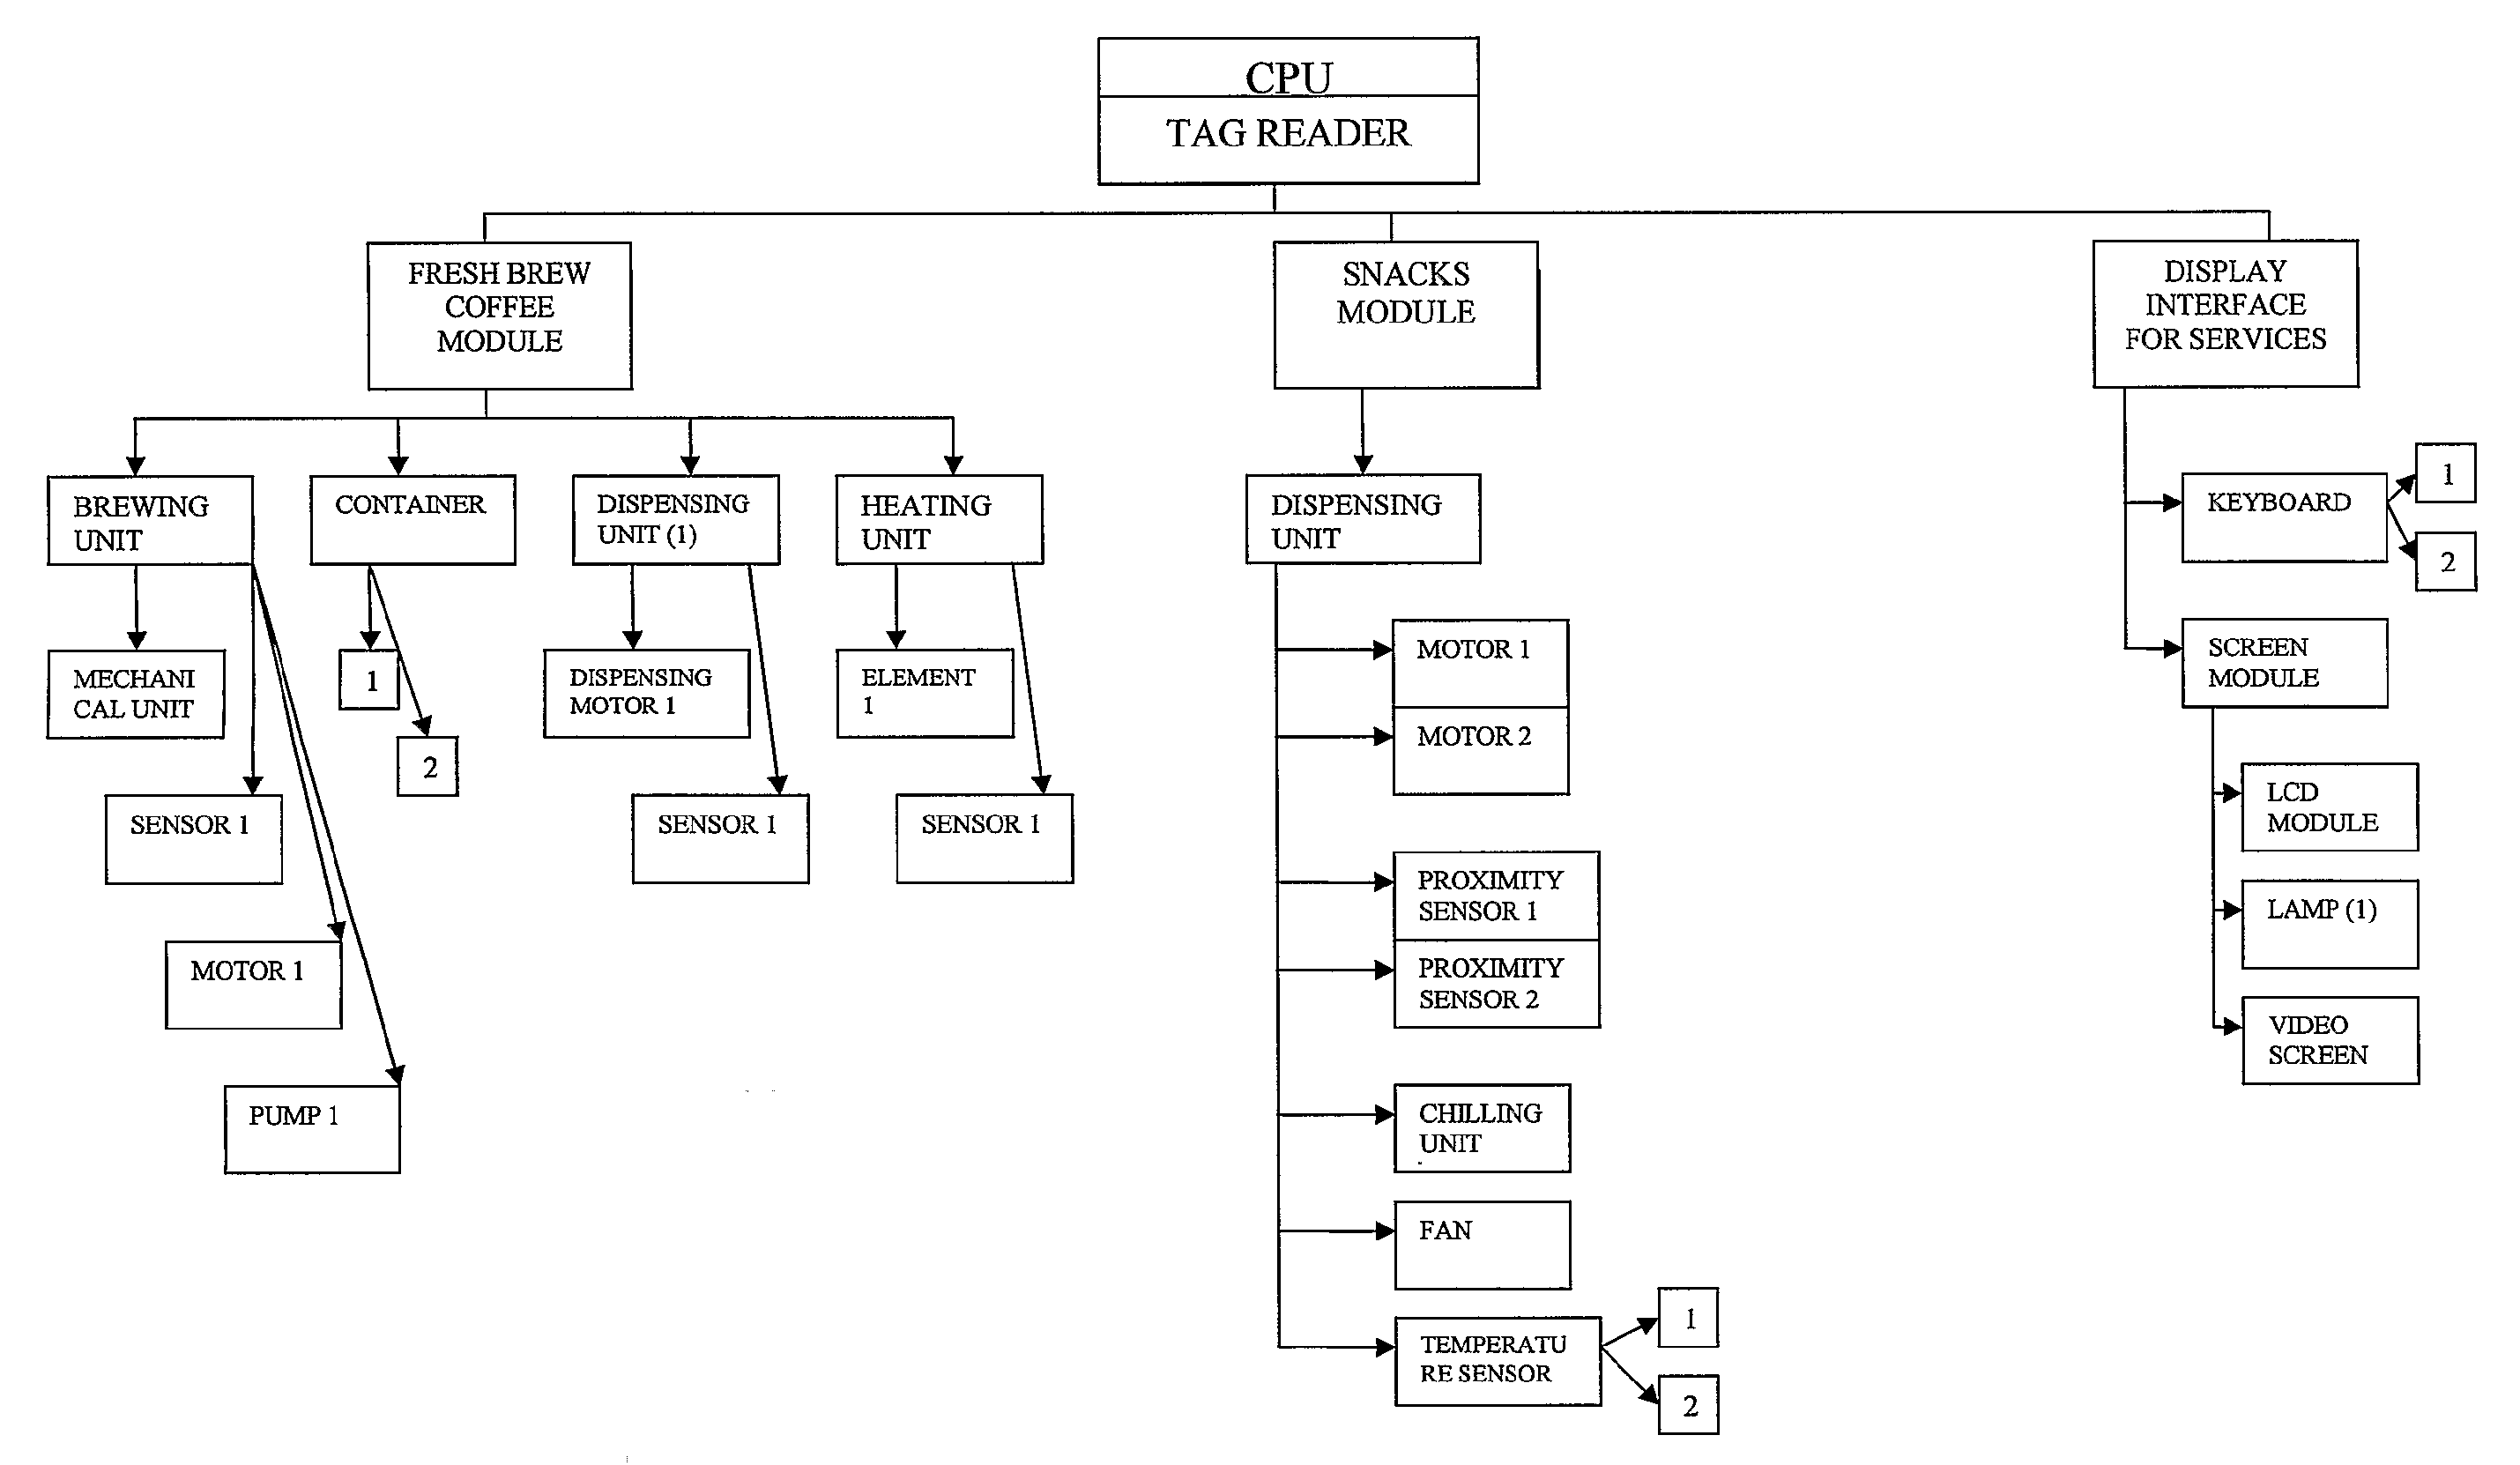 Apparatus and method for dispensing machine control